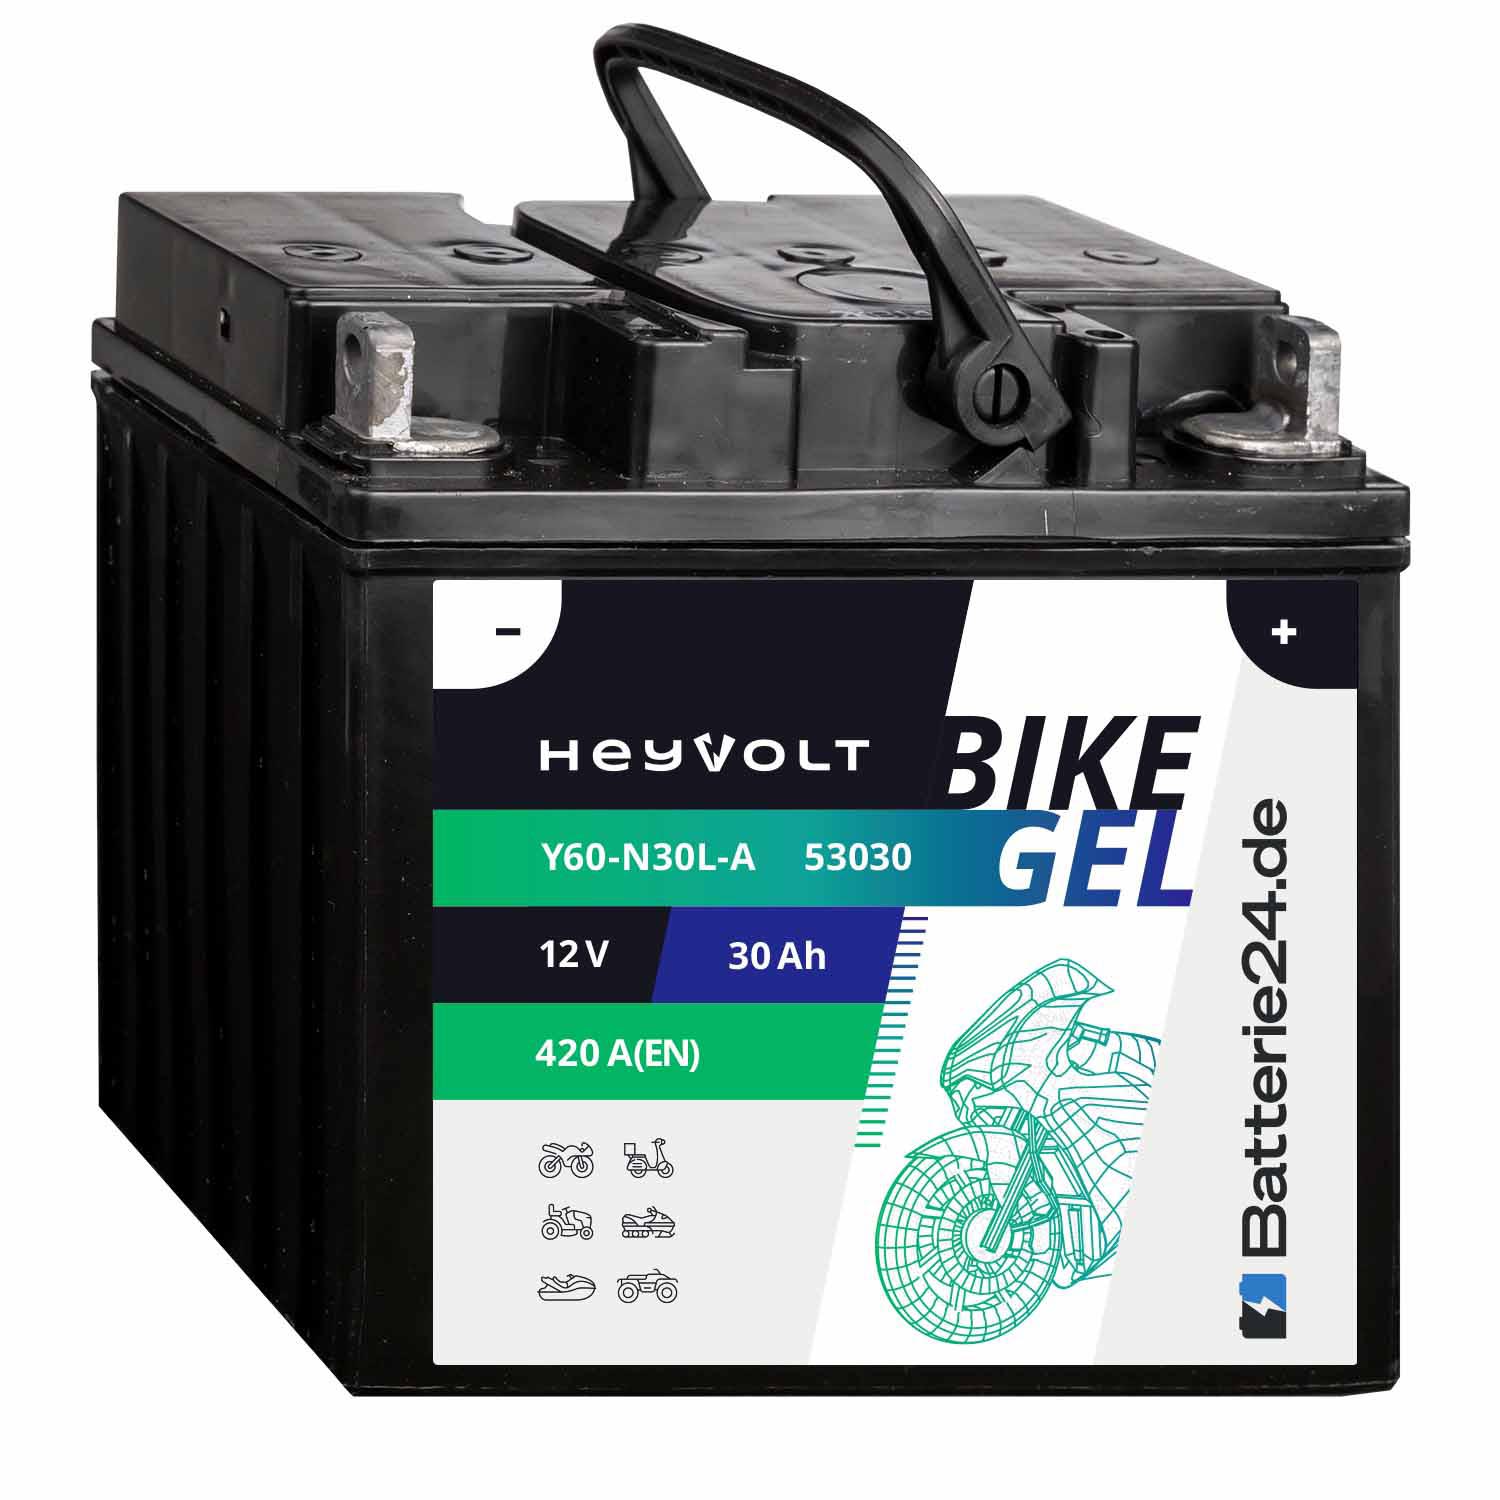 HeyVolt BIKE GEL Motorradbatterie Y60-N30L-A 53030 12V 30Ah, Motorradbatterien, Starterbatterien, Fahrzeugbatterien